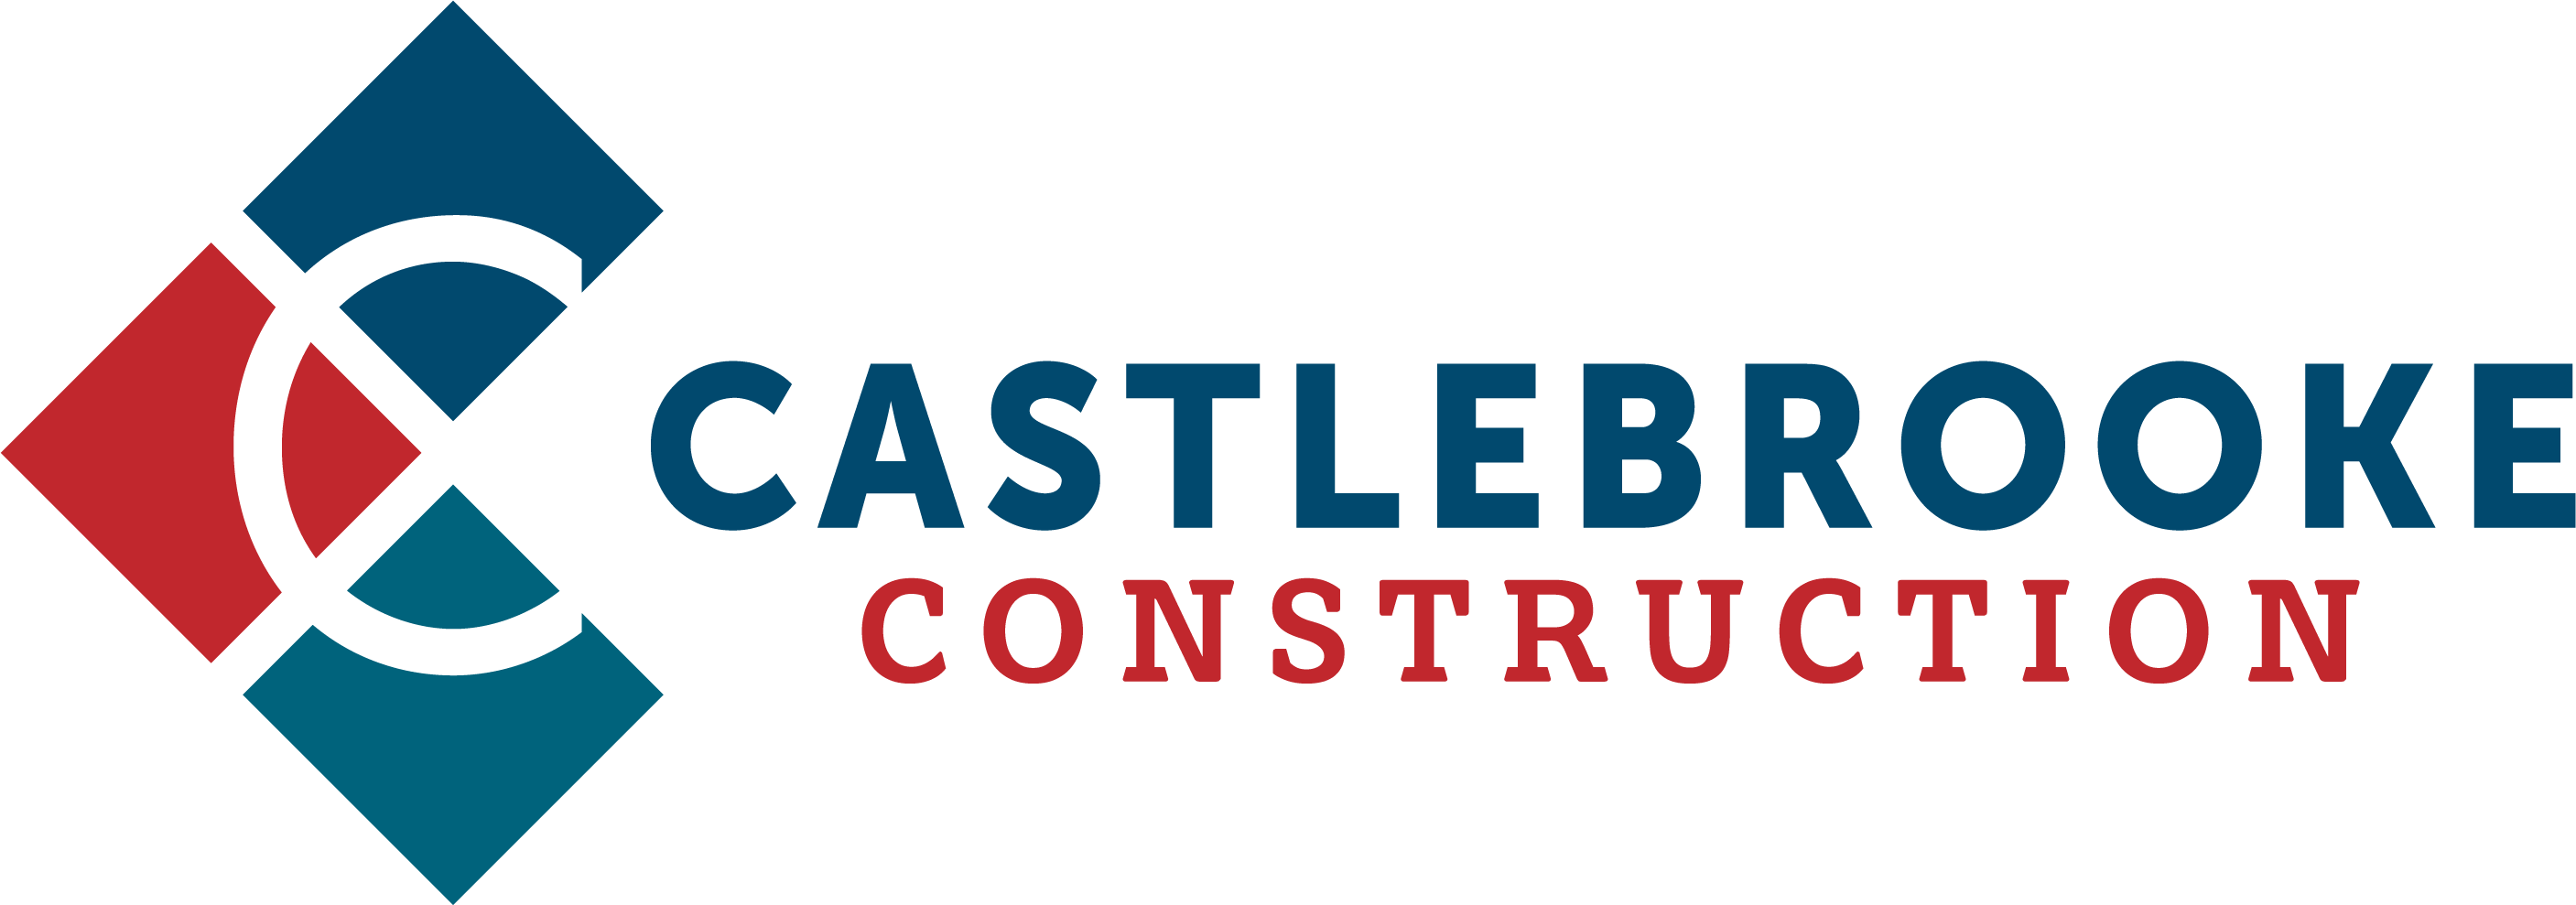 Castlebrooke Construction